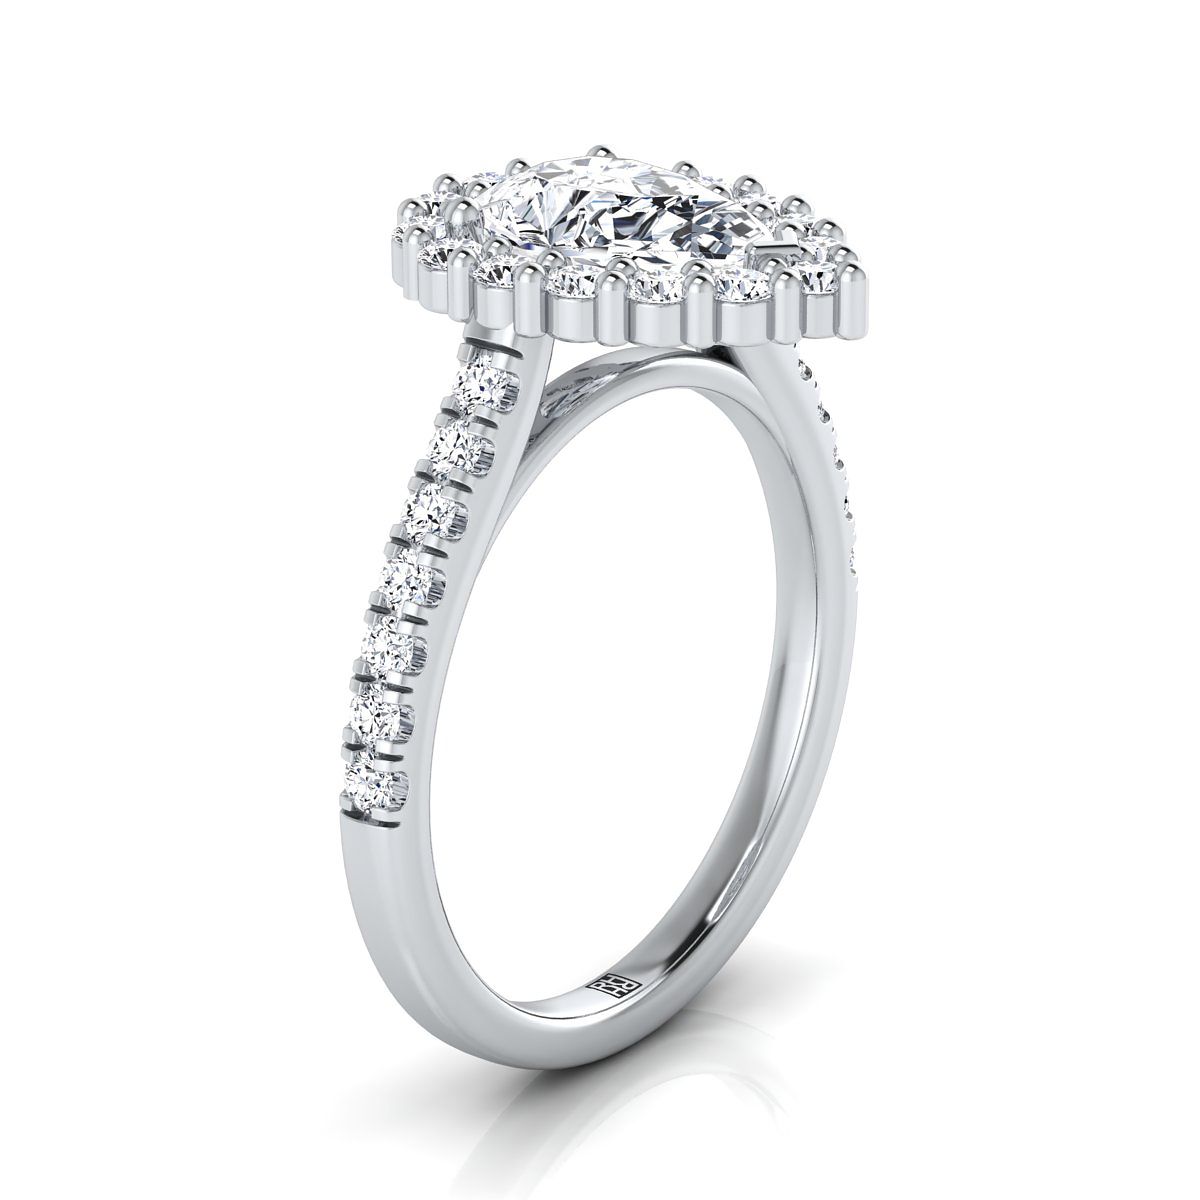 14K White Gold Pear Shape Center Diamond Shared Prong Halo Engagement Ring -5/8ctw